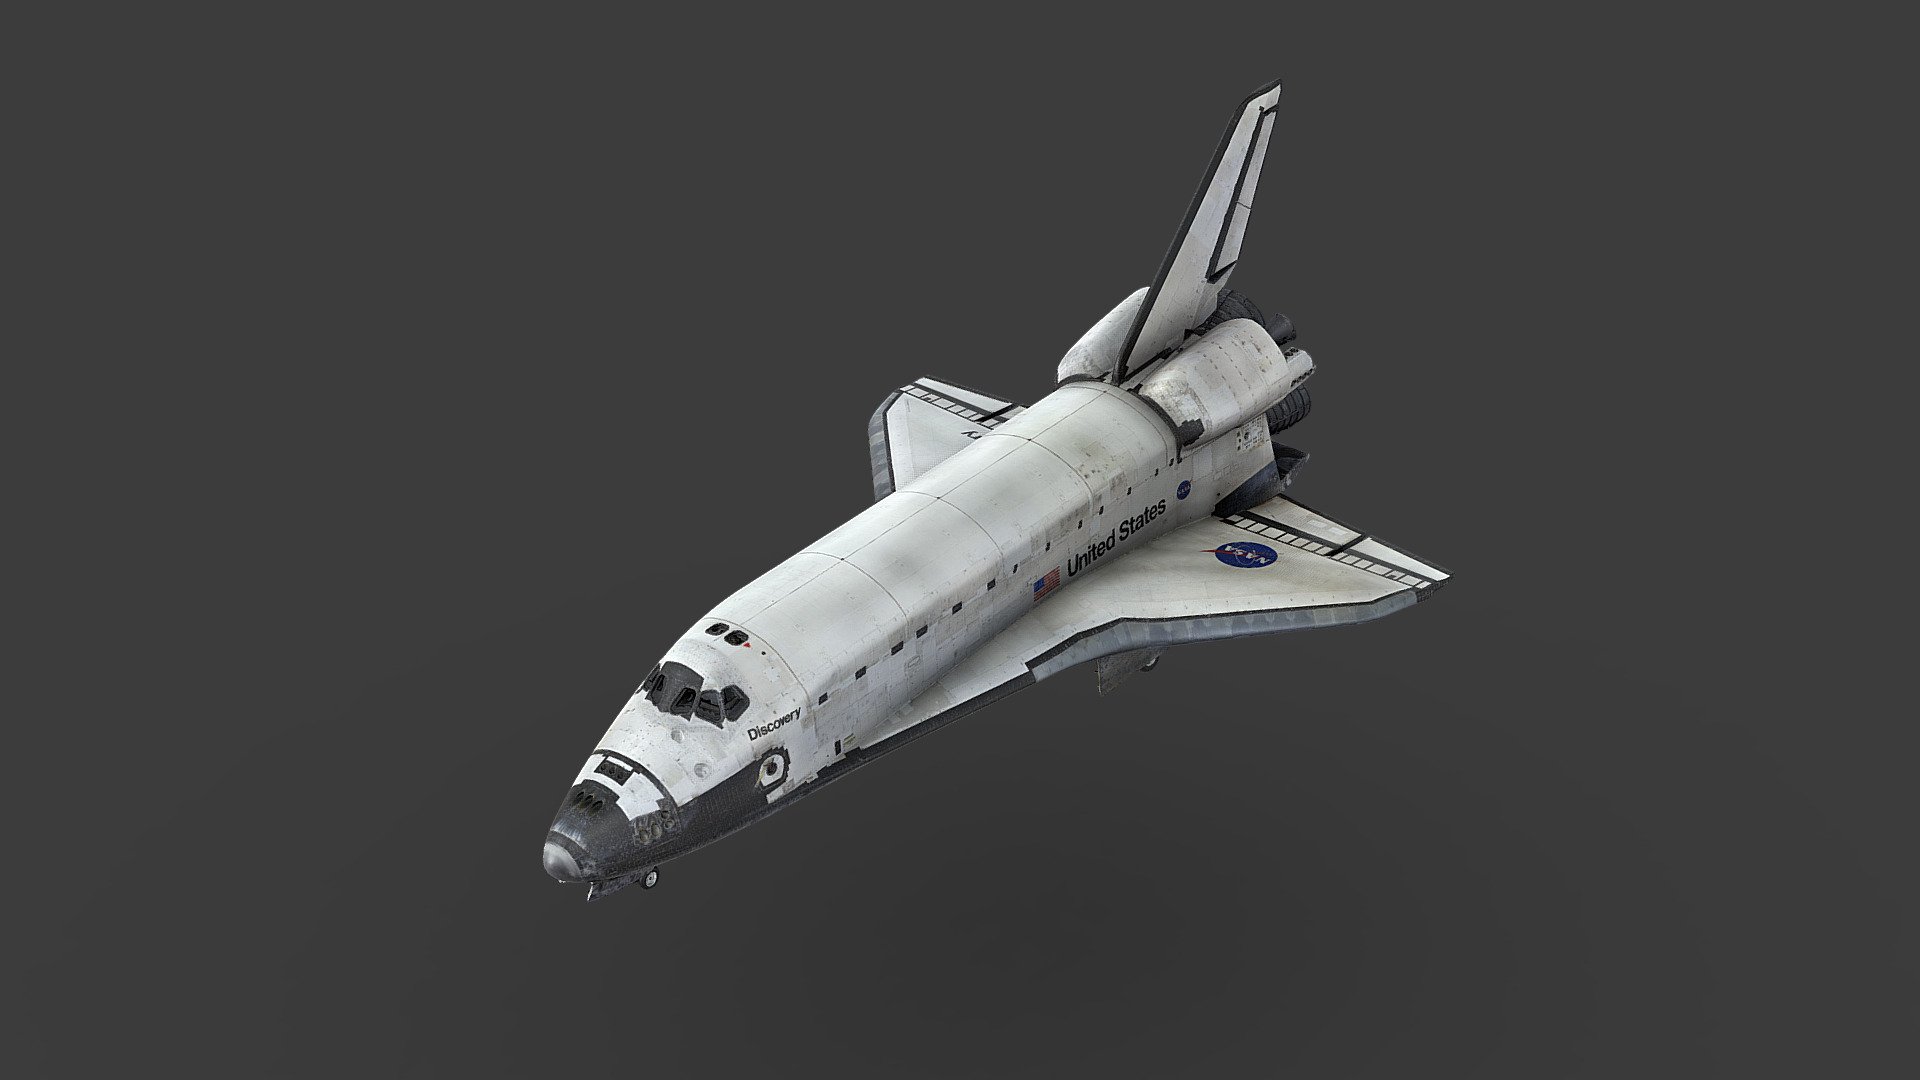 buy lego nasa space shuttle discovery